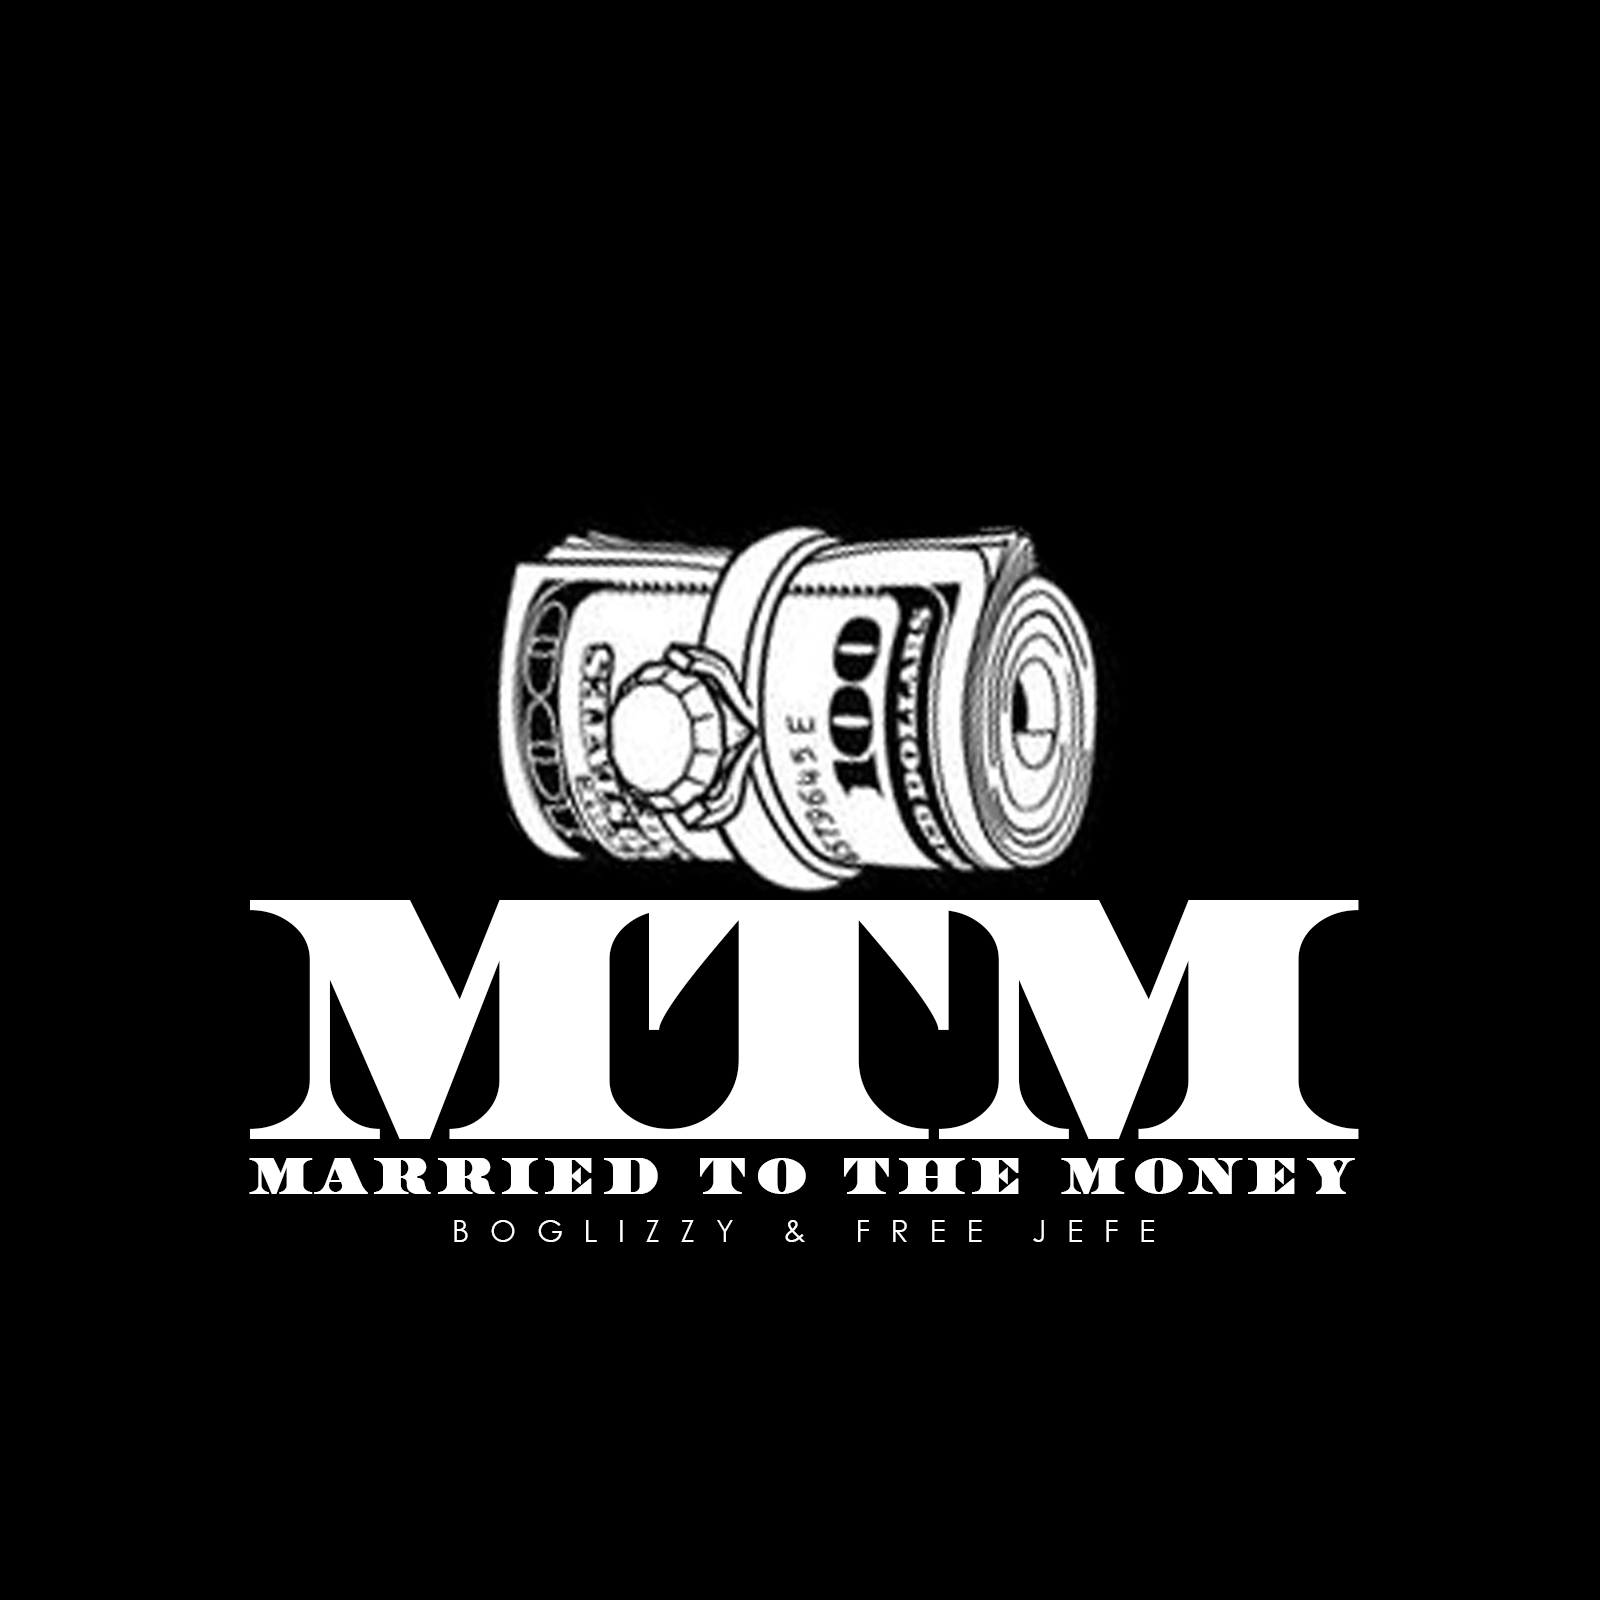 Get Money Logo - Money Logo Design. banking and finance logo design layout with money